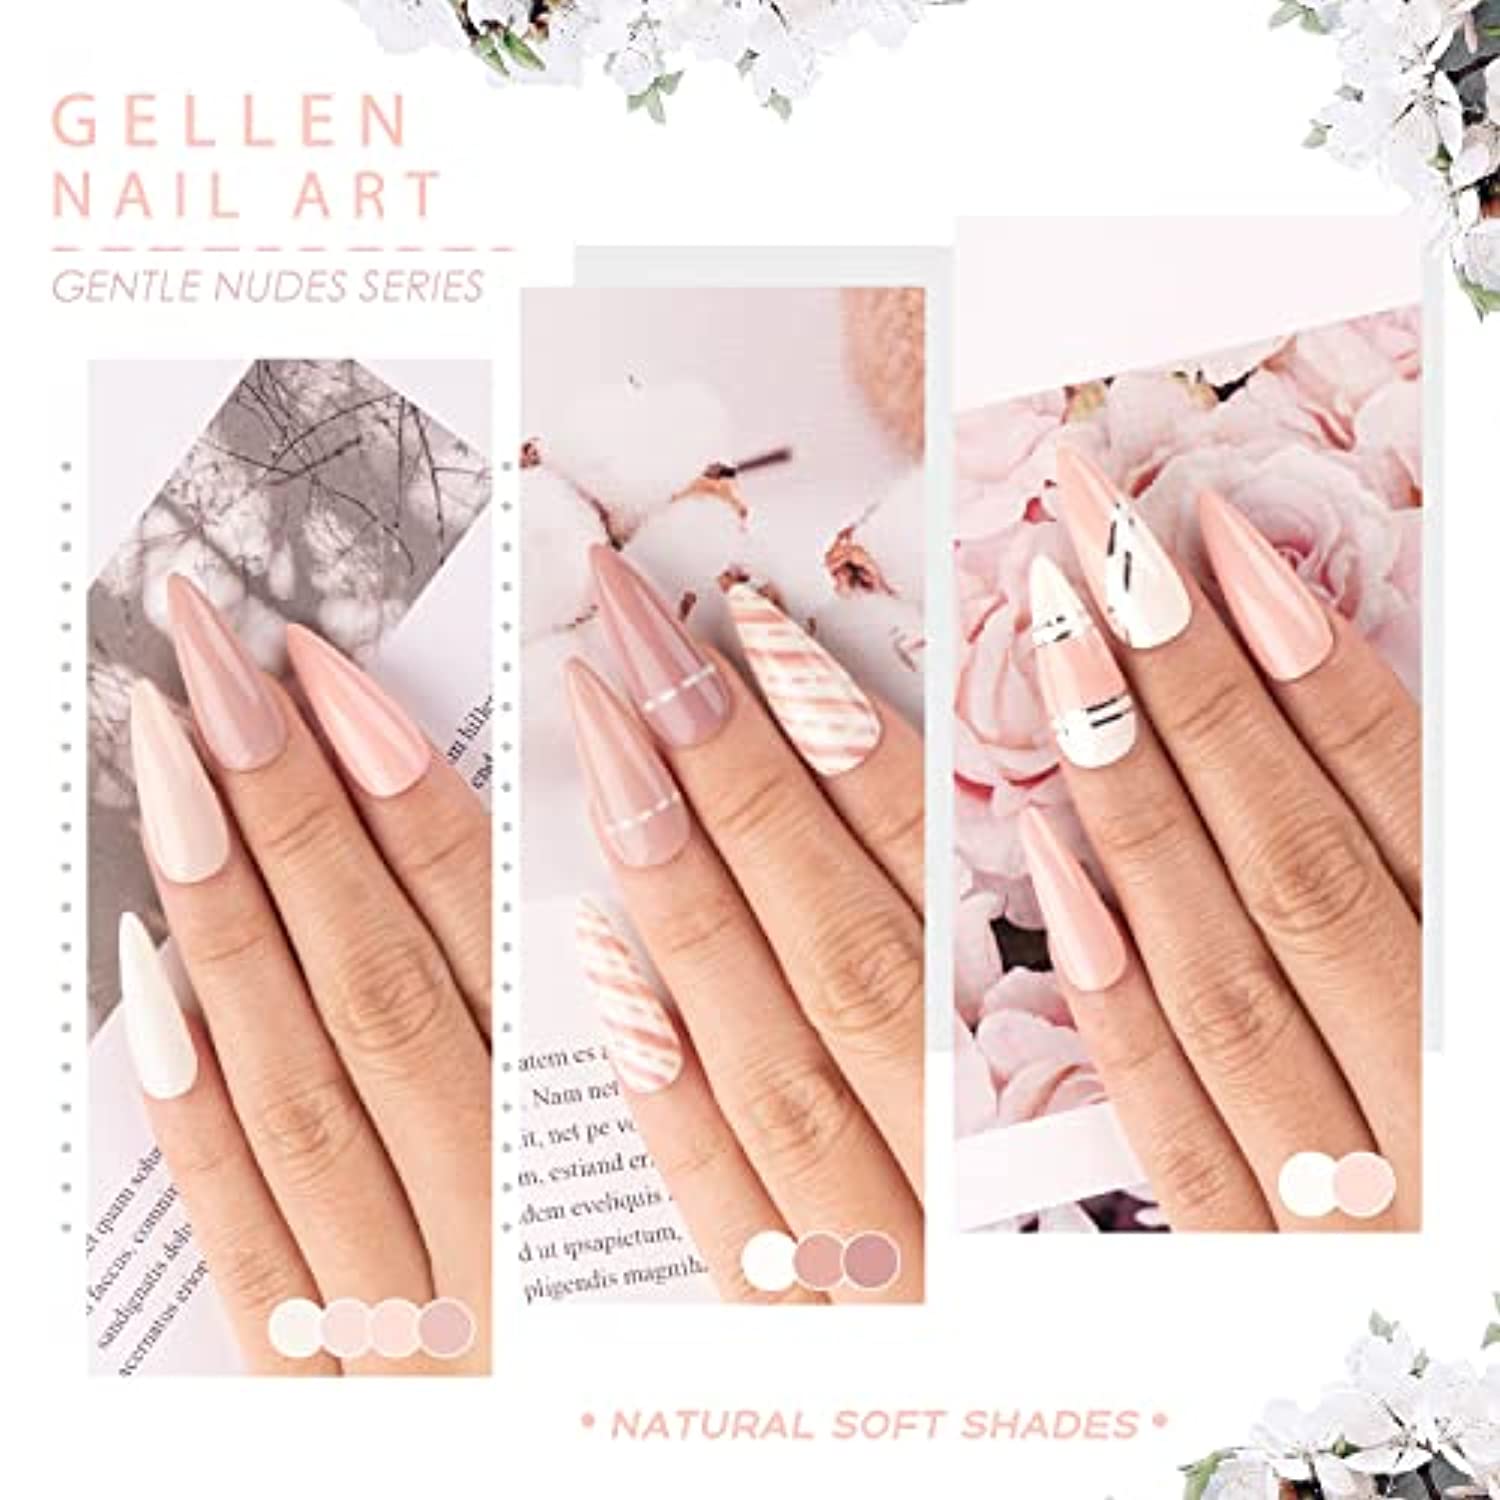 Gellen Gel Nail Polish Kit- Gentle Nudes Series Nude Neutrals 6 Colors, Warm Pastels Beige Pink Soak Off Gel Polish Set